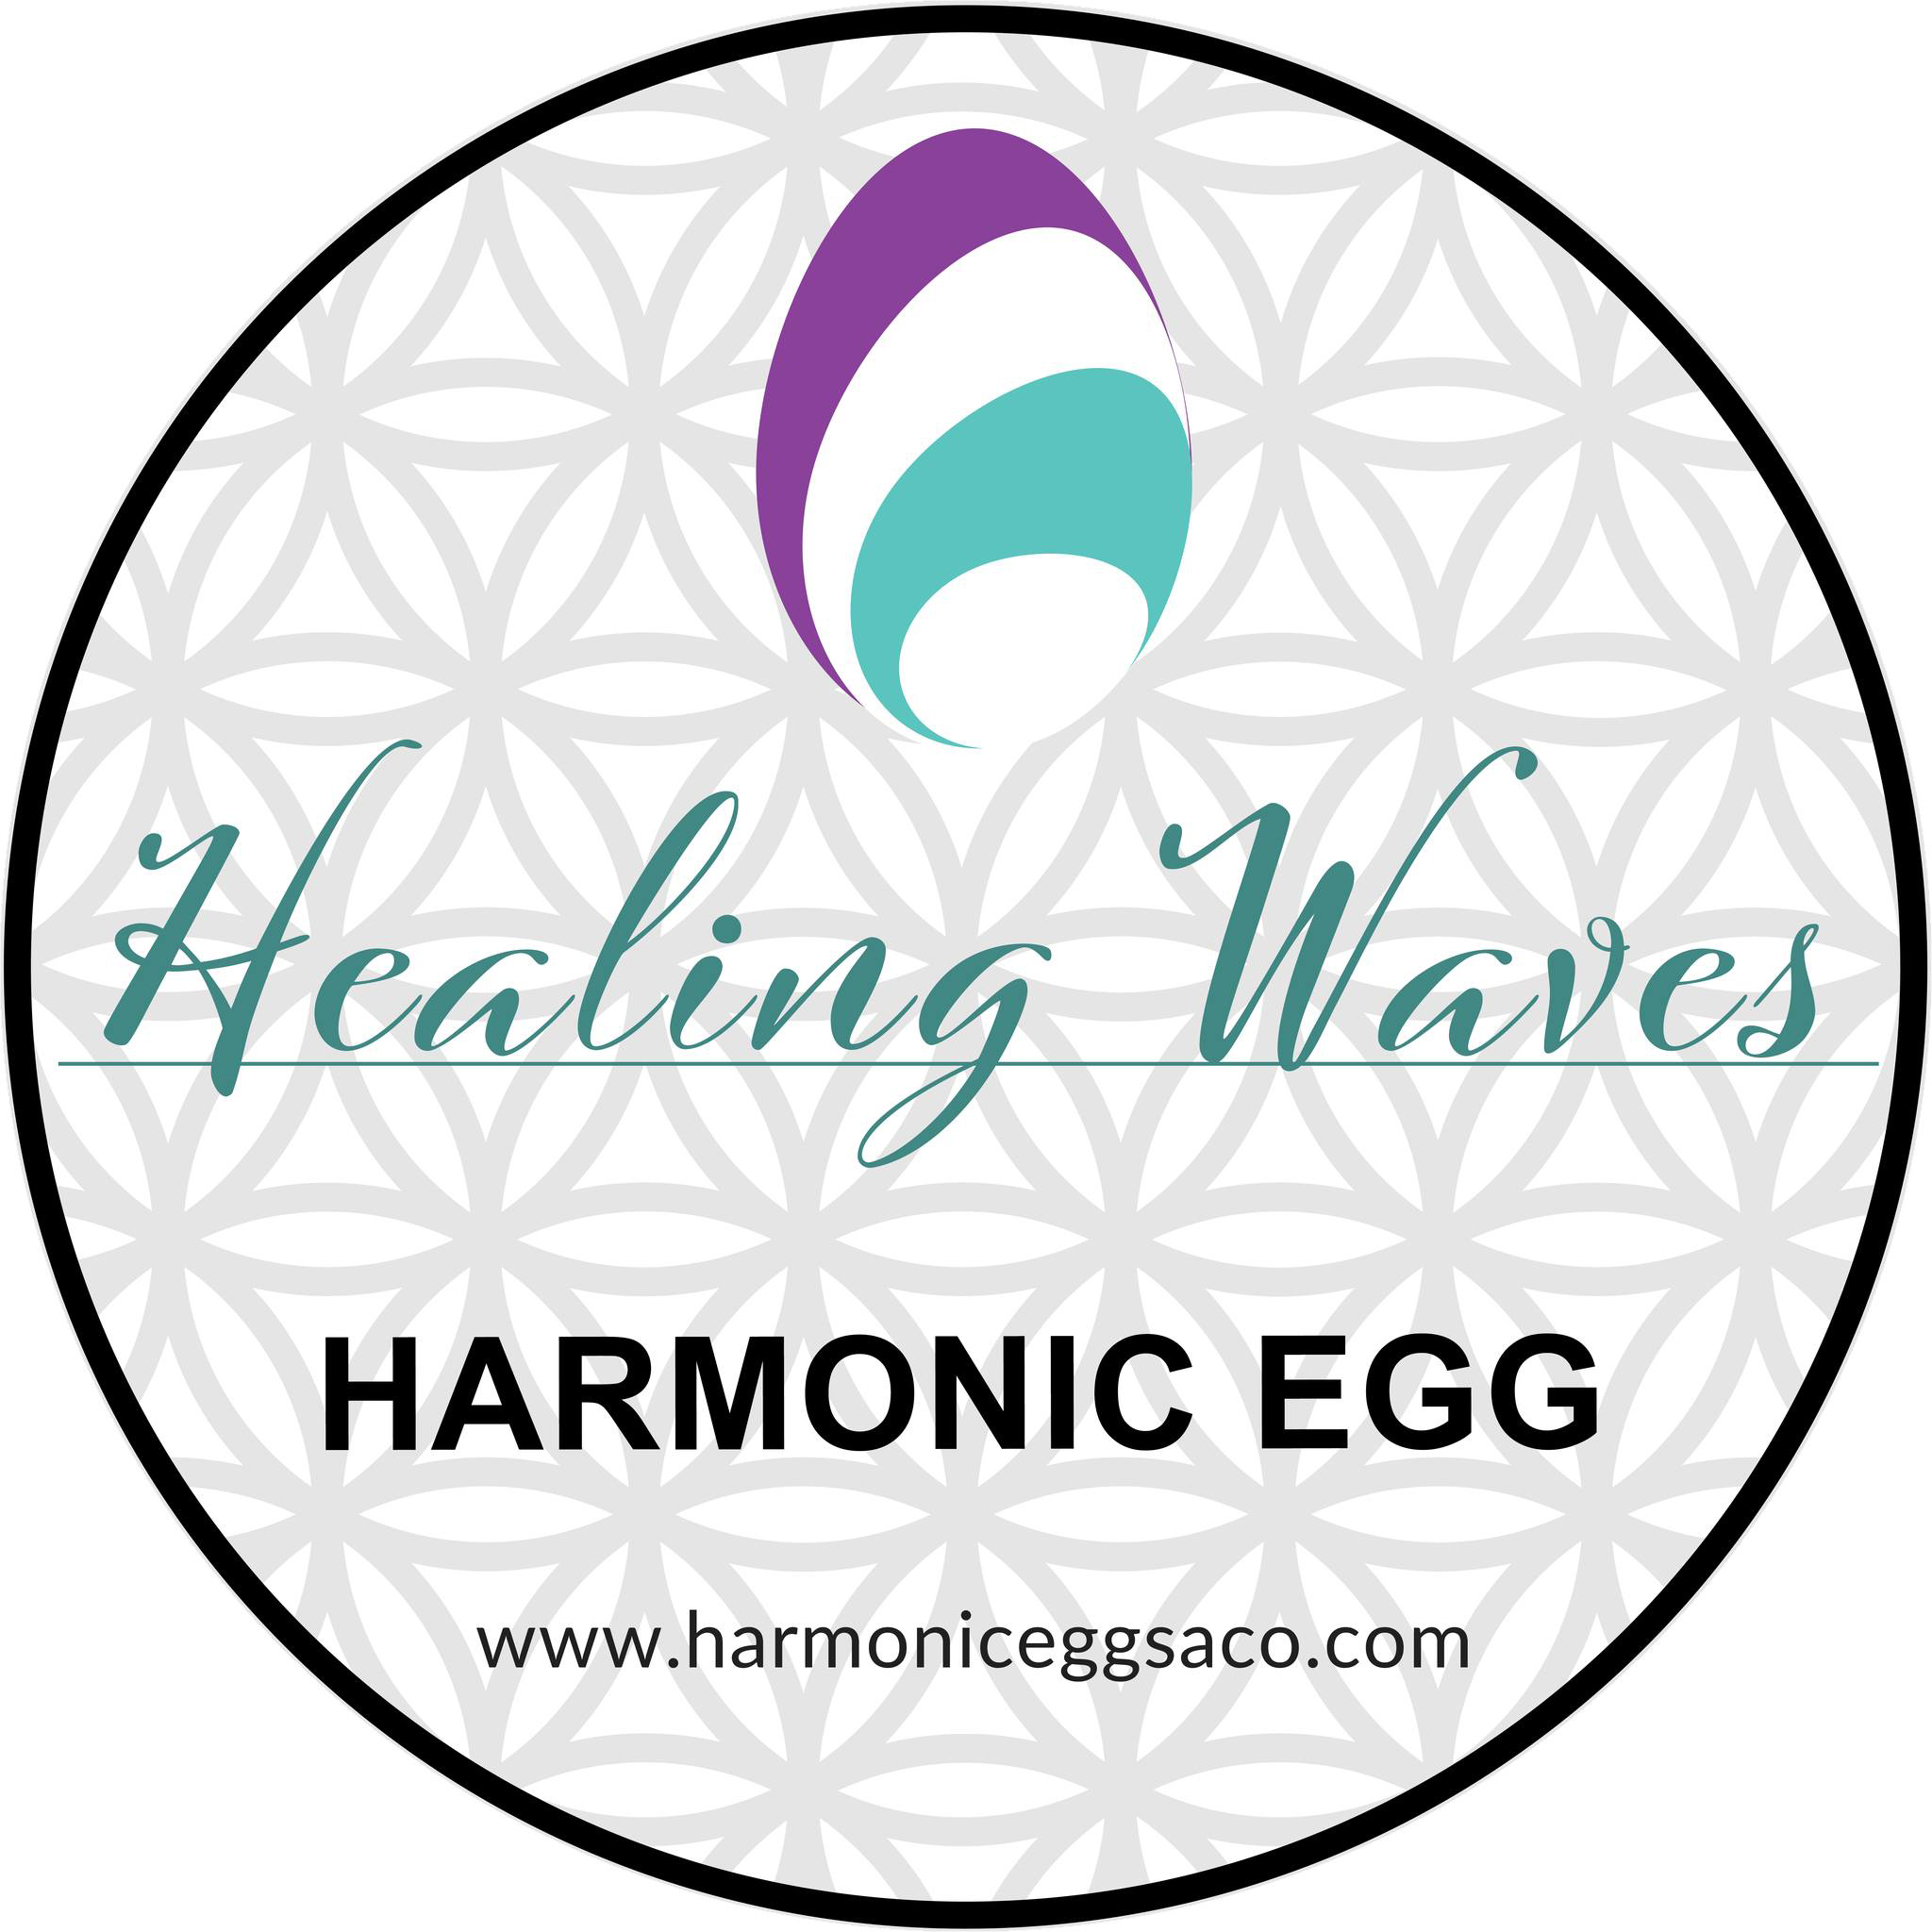 60 Minute Harmonic Egg Saco Session